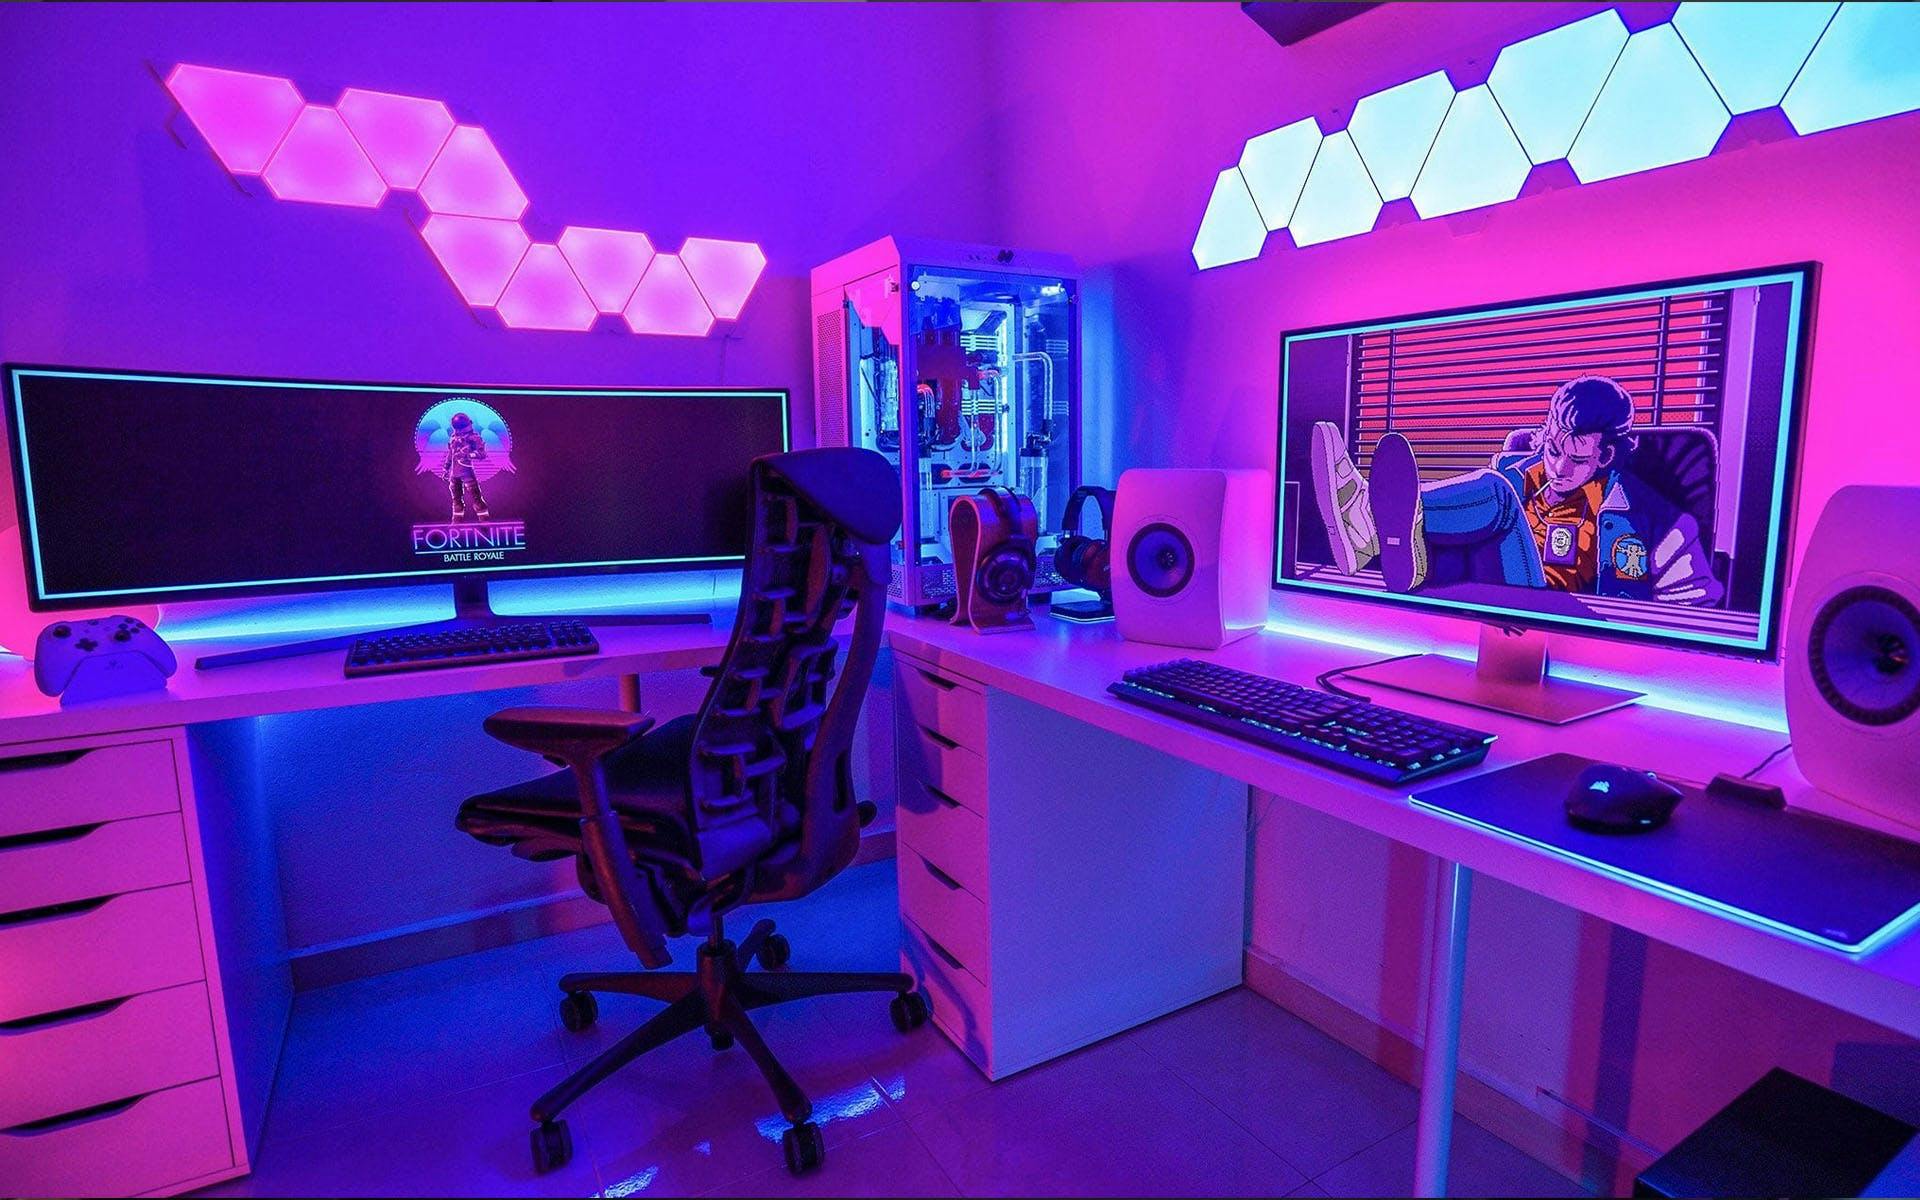 LED gaming room with RGB lighting